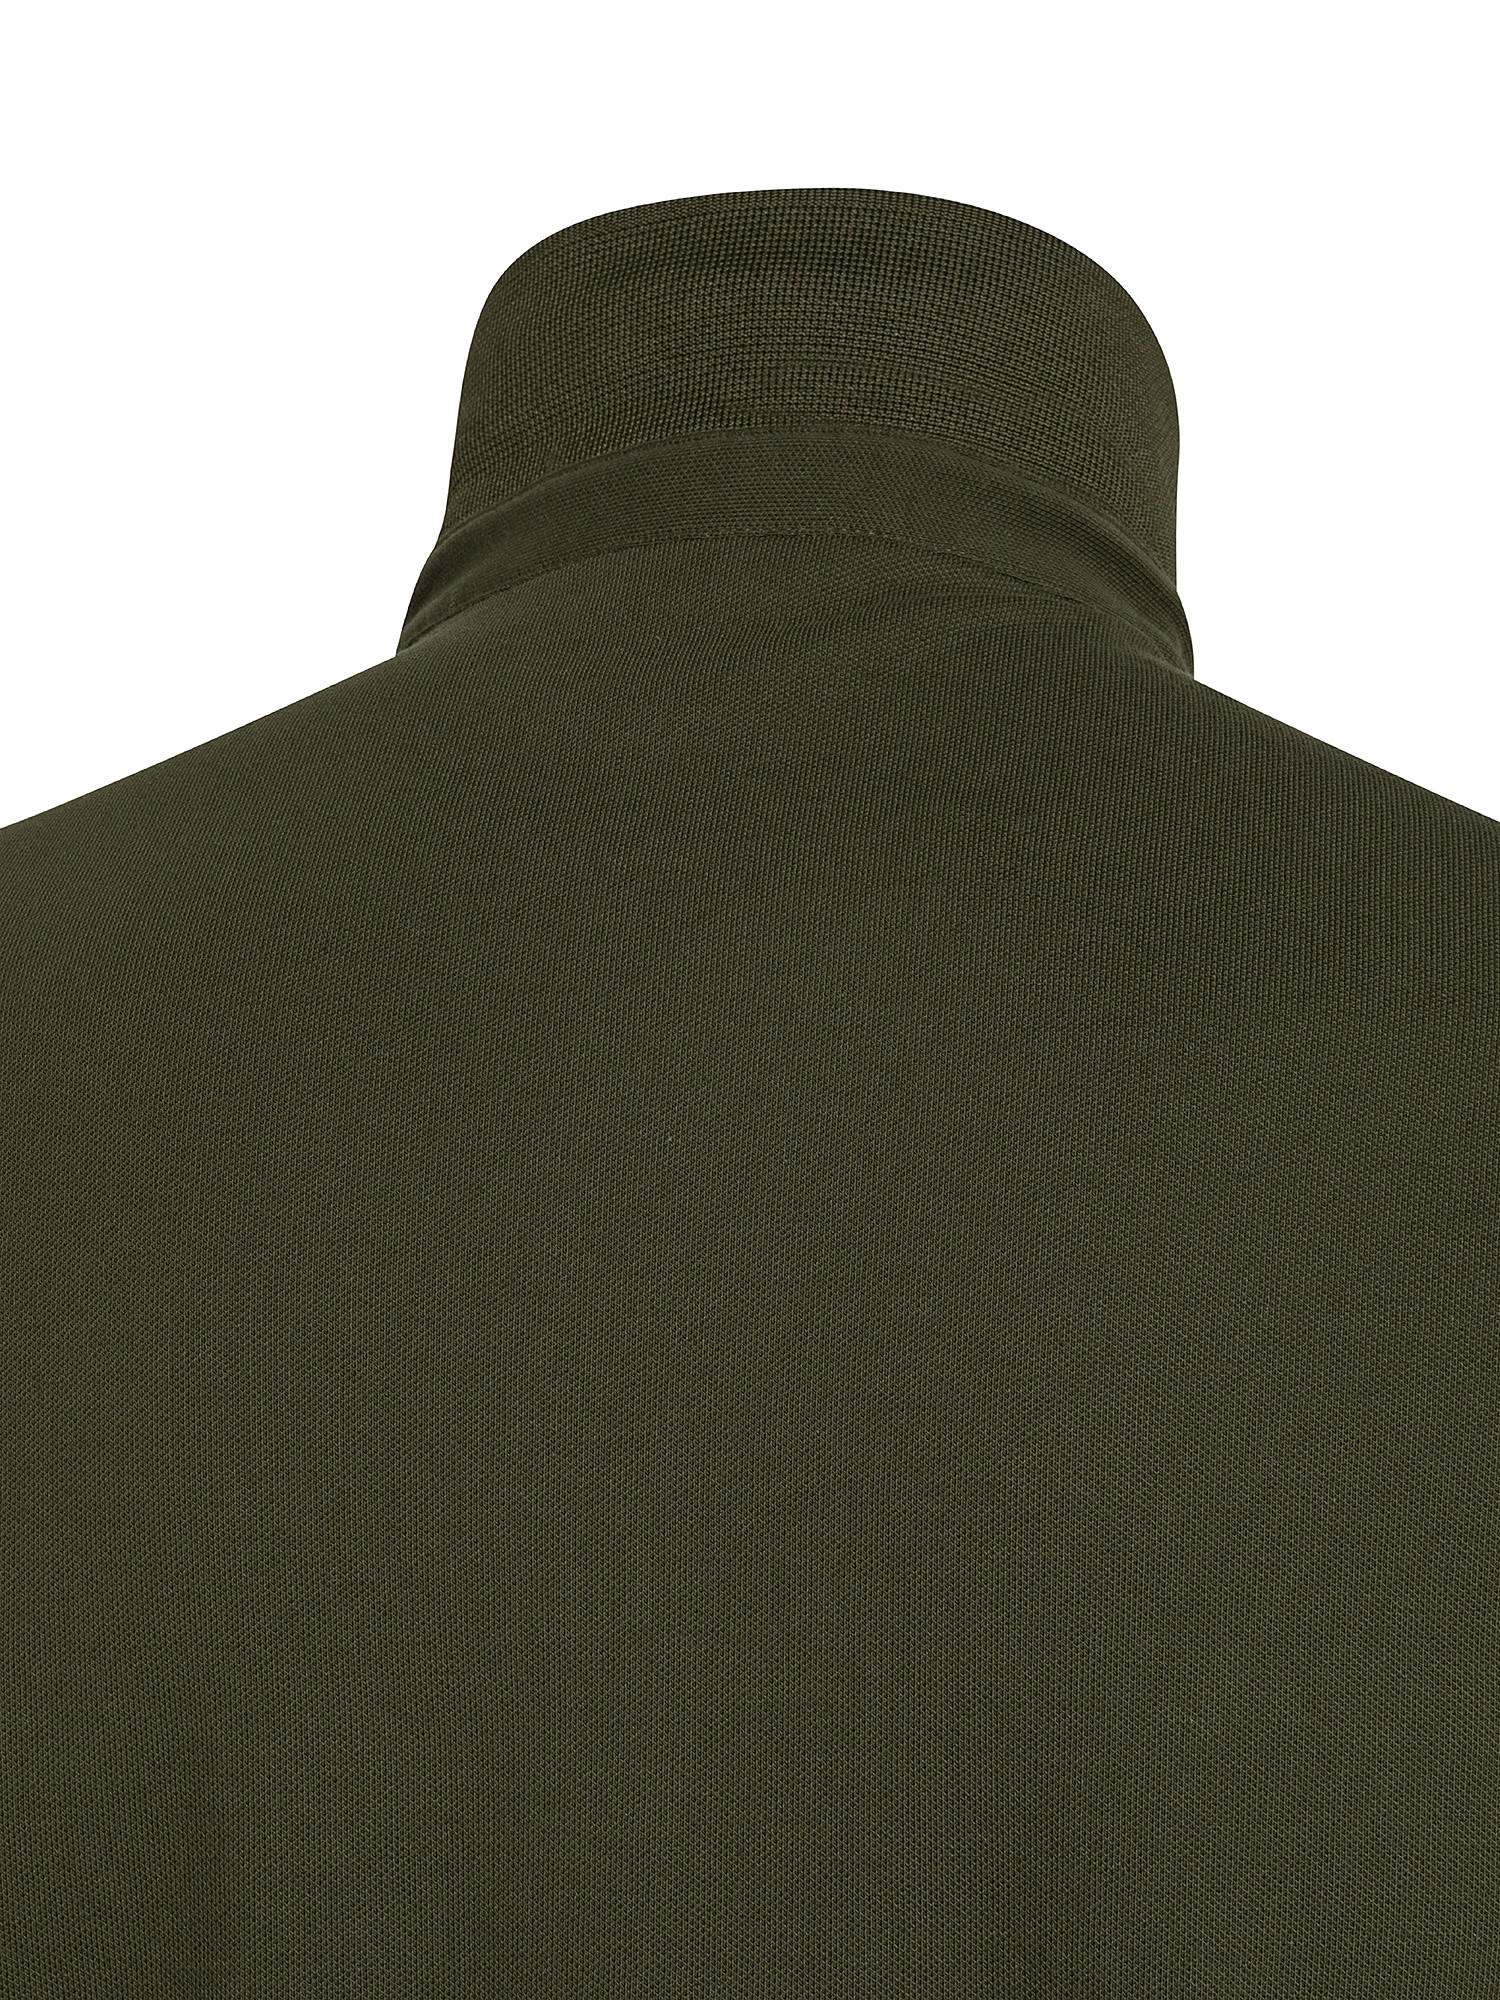 Polo shirt, Dark Green, large image number 2